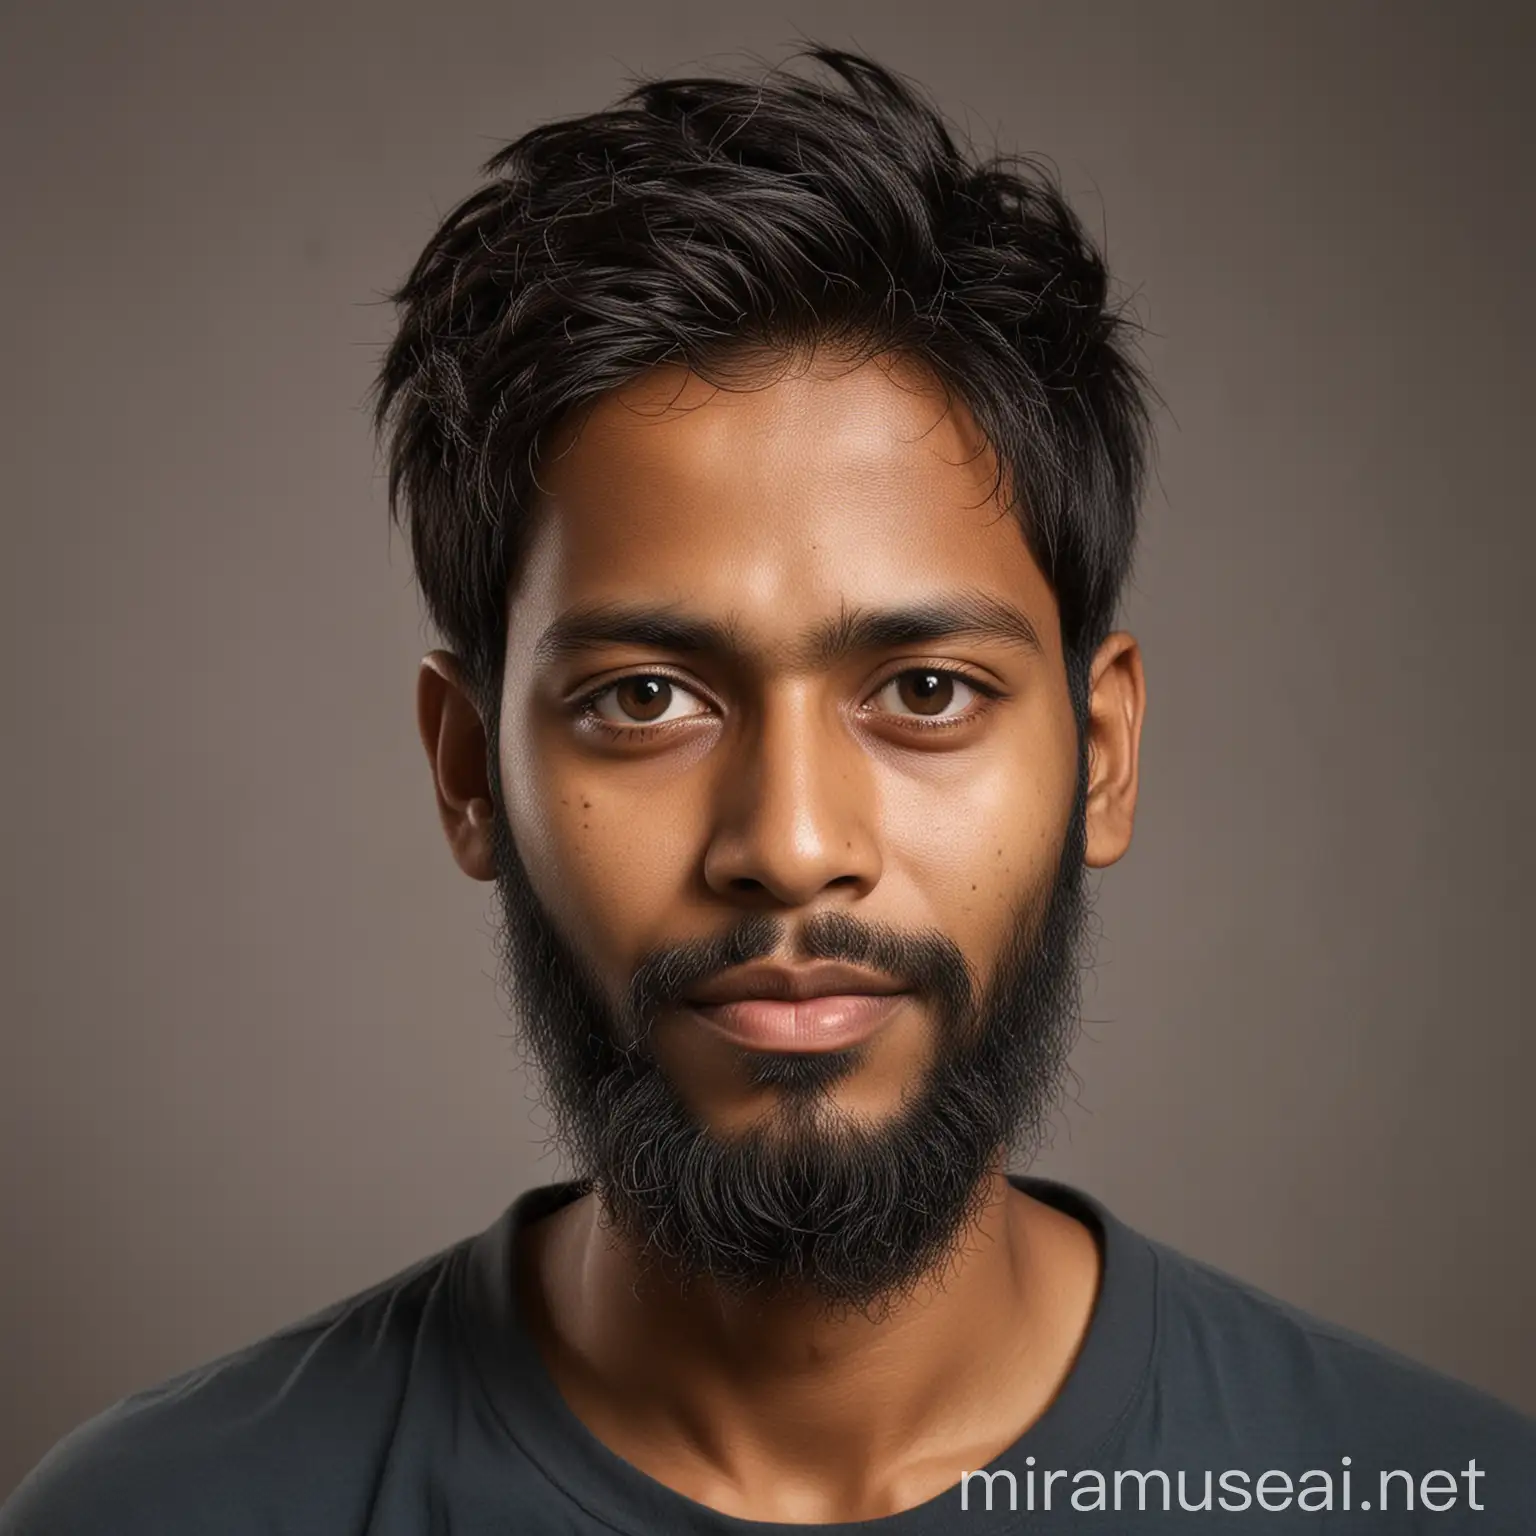 Bangladeshi SelfEmployed Man with Fair Complexion and Beard